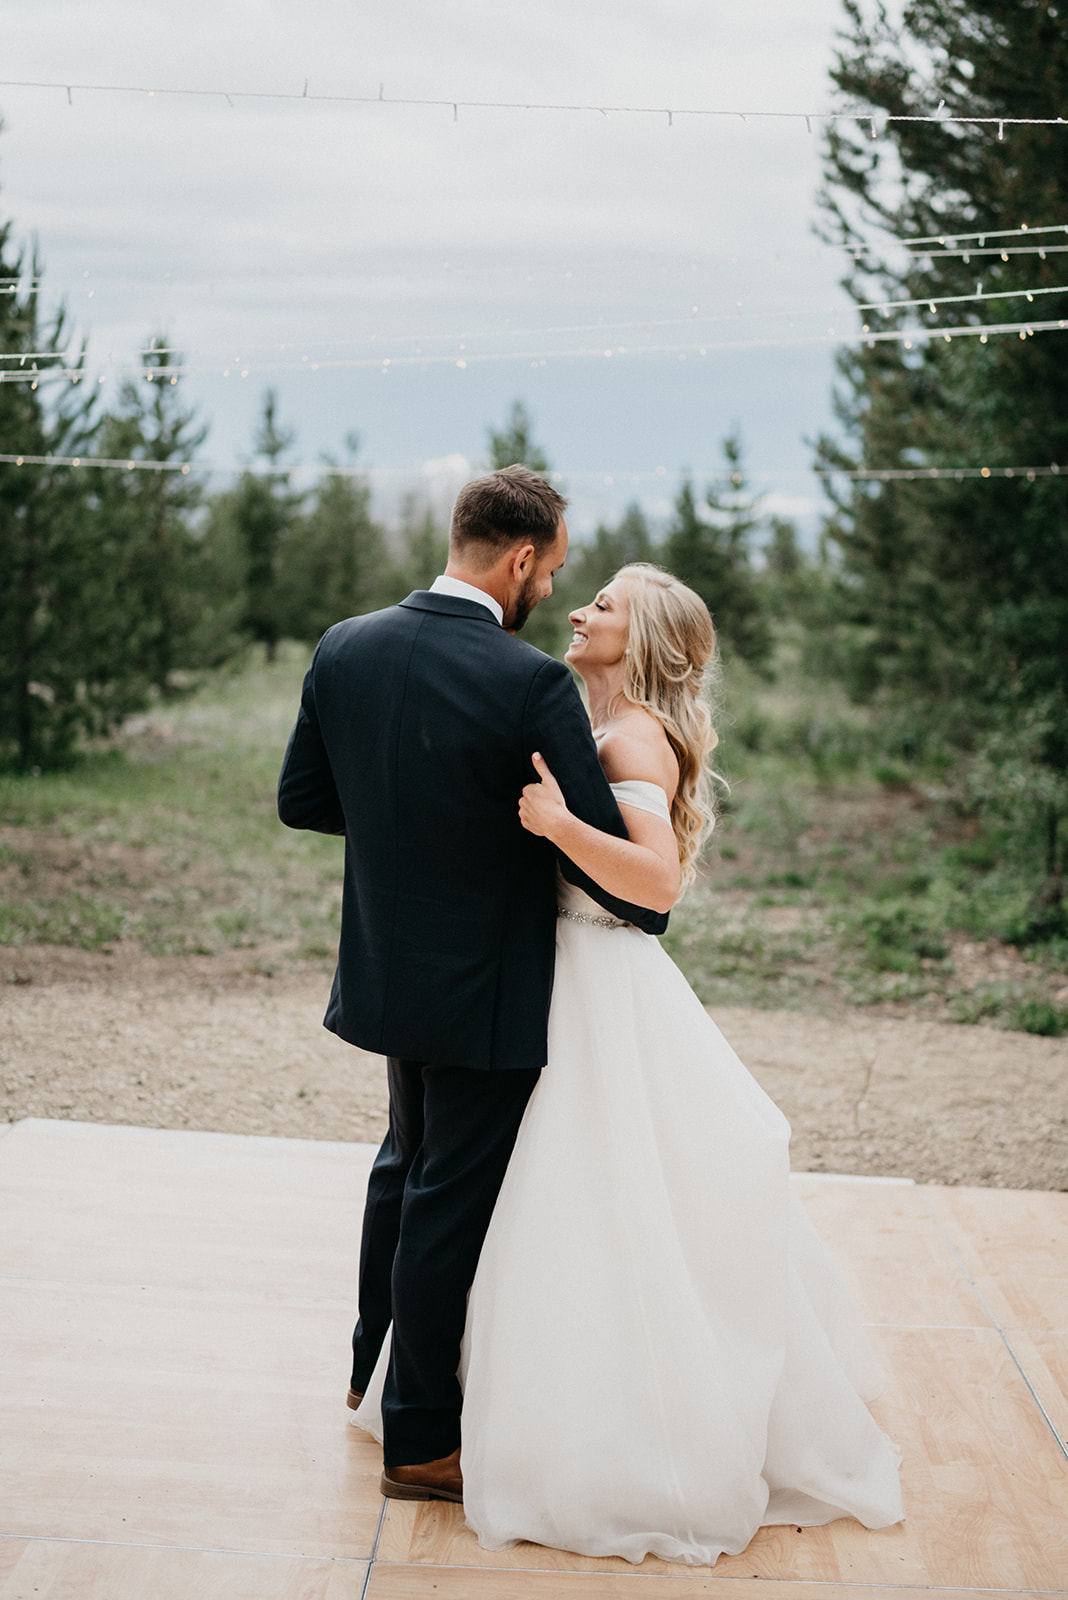 Couple sharing their first dance during their Colorado mountain wedding